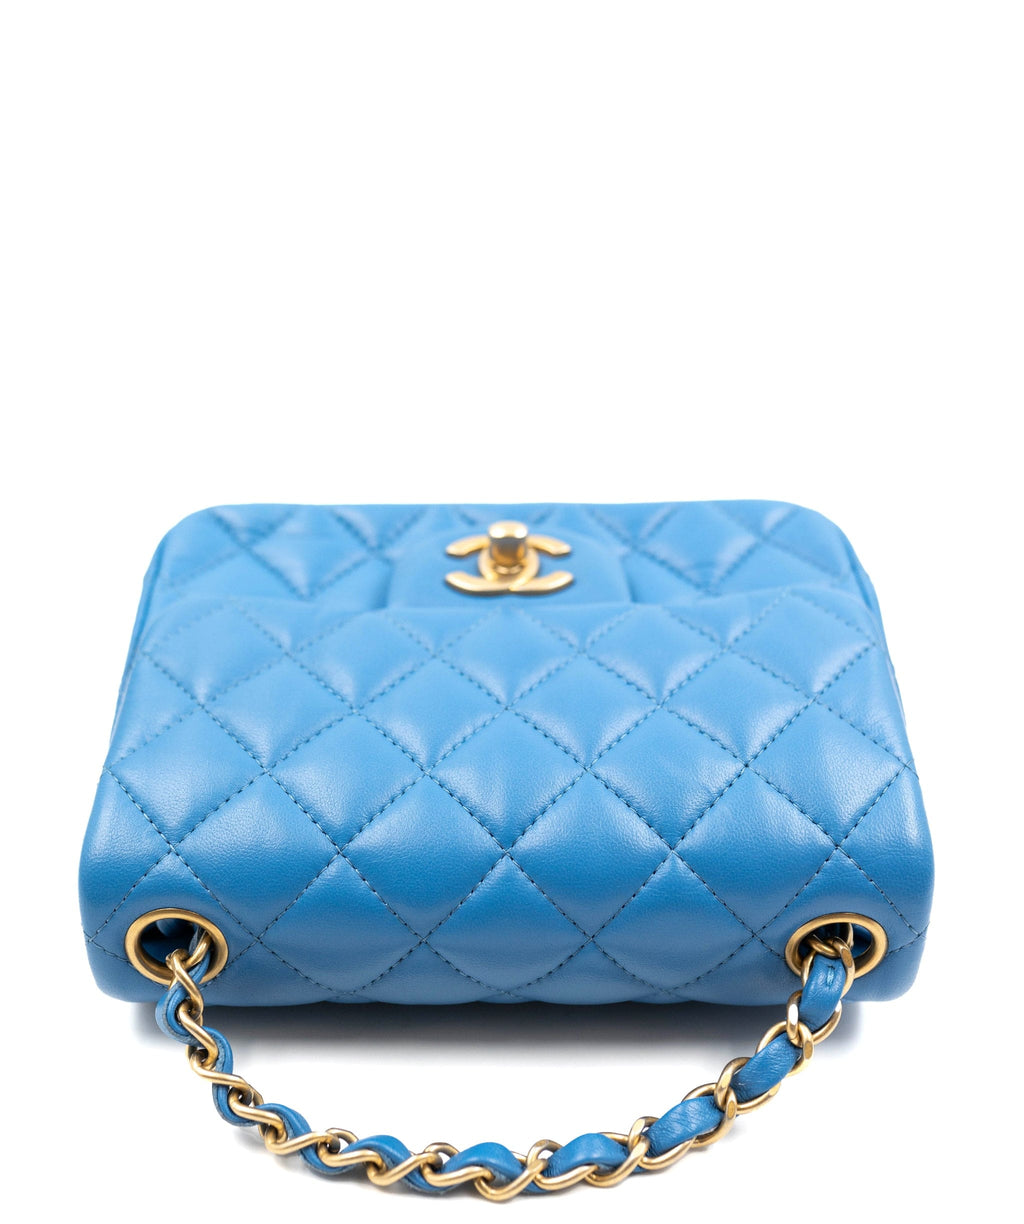 Chanel Mini Flap Bag A01112 B10295 NM468, Blue, One Size